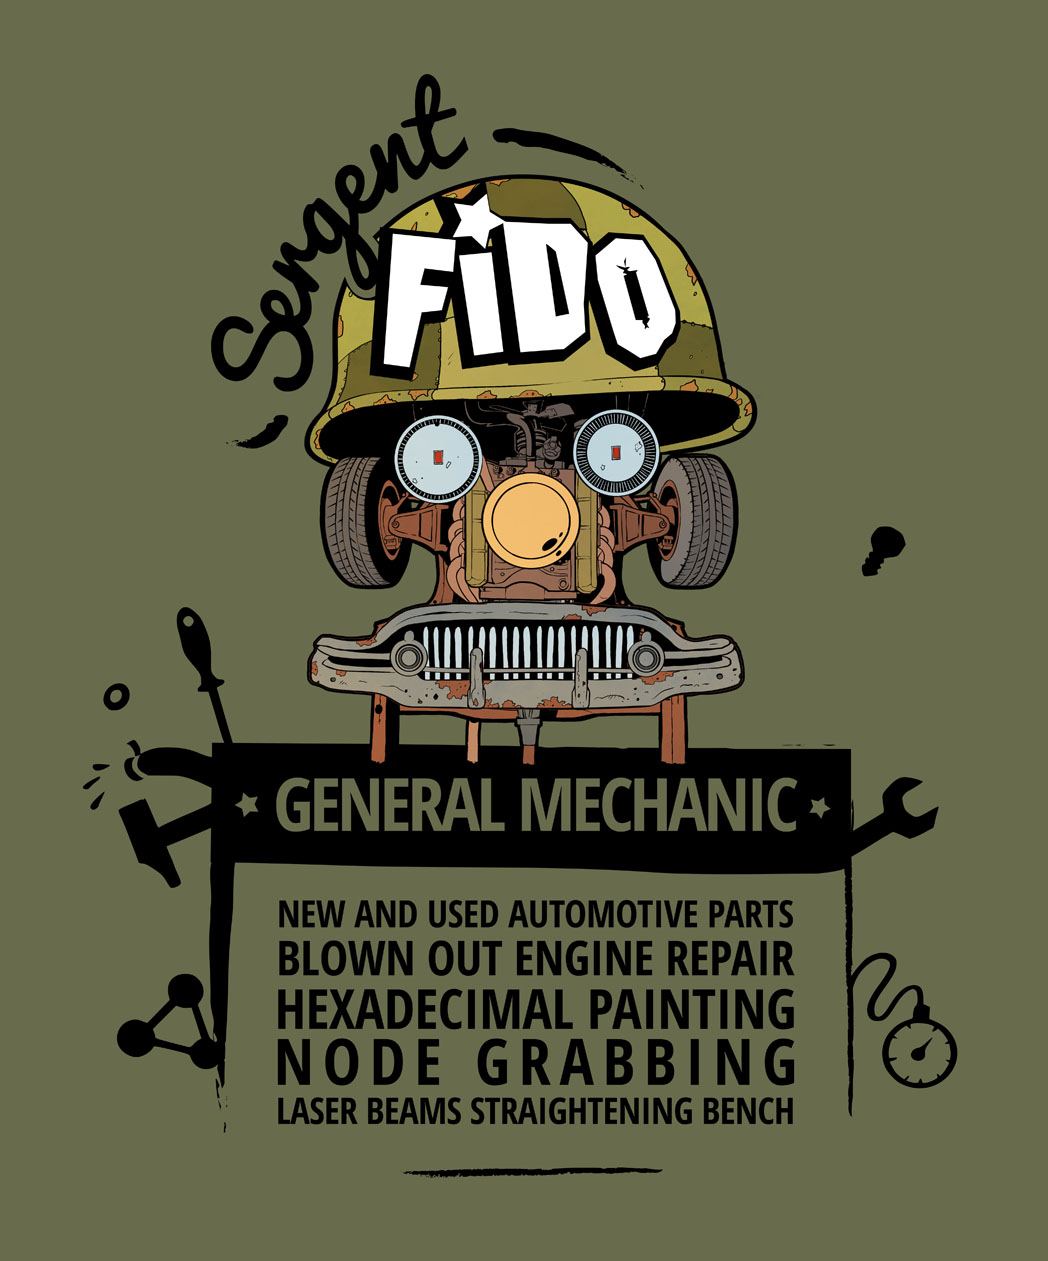 Sergent Fido Logo